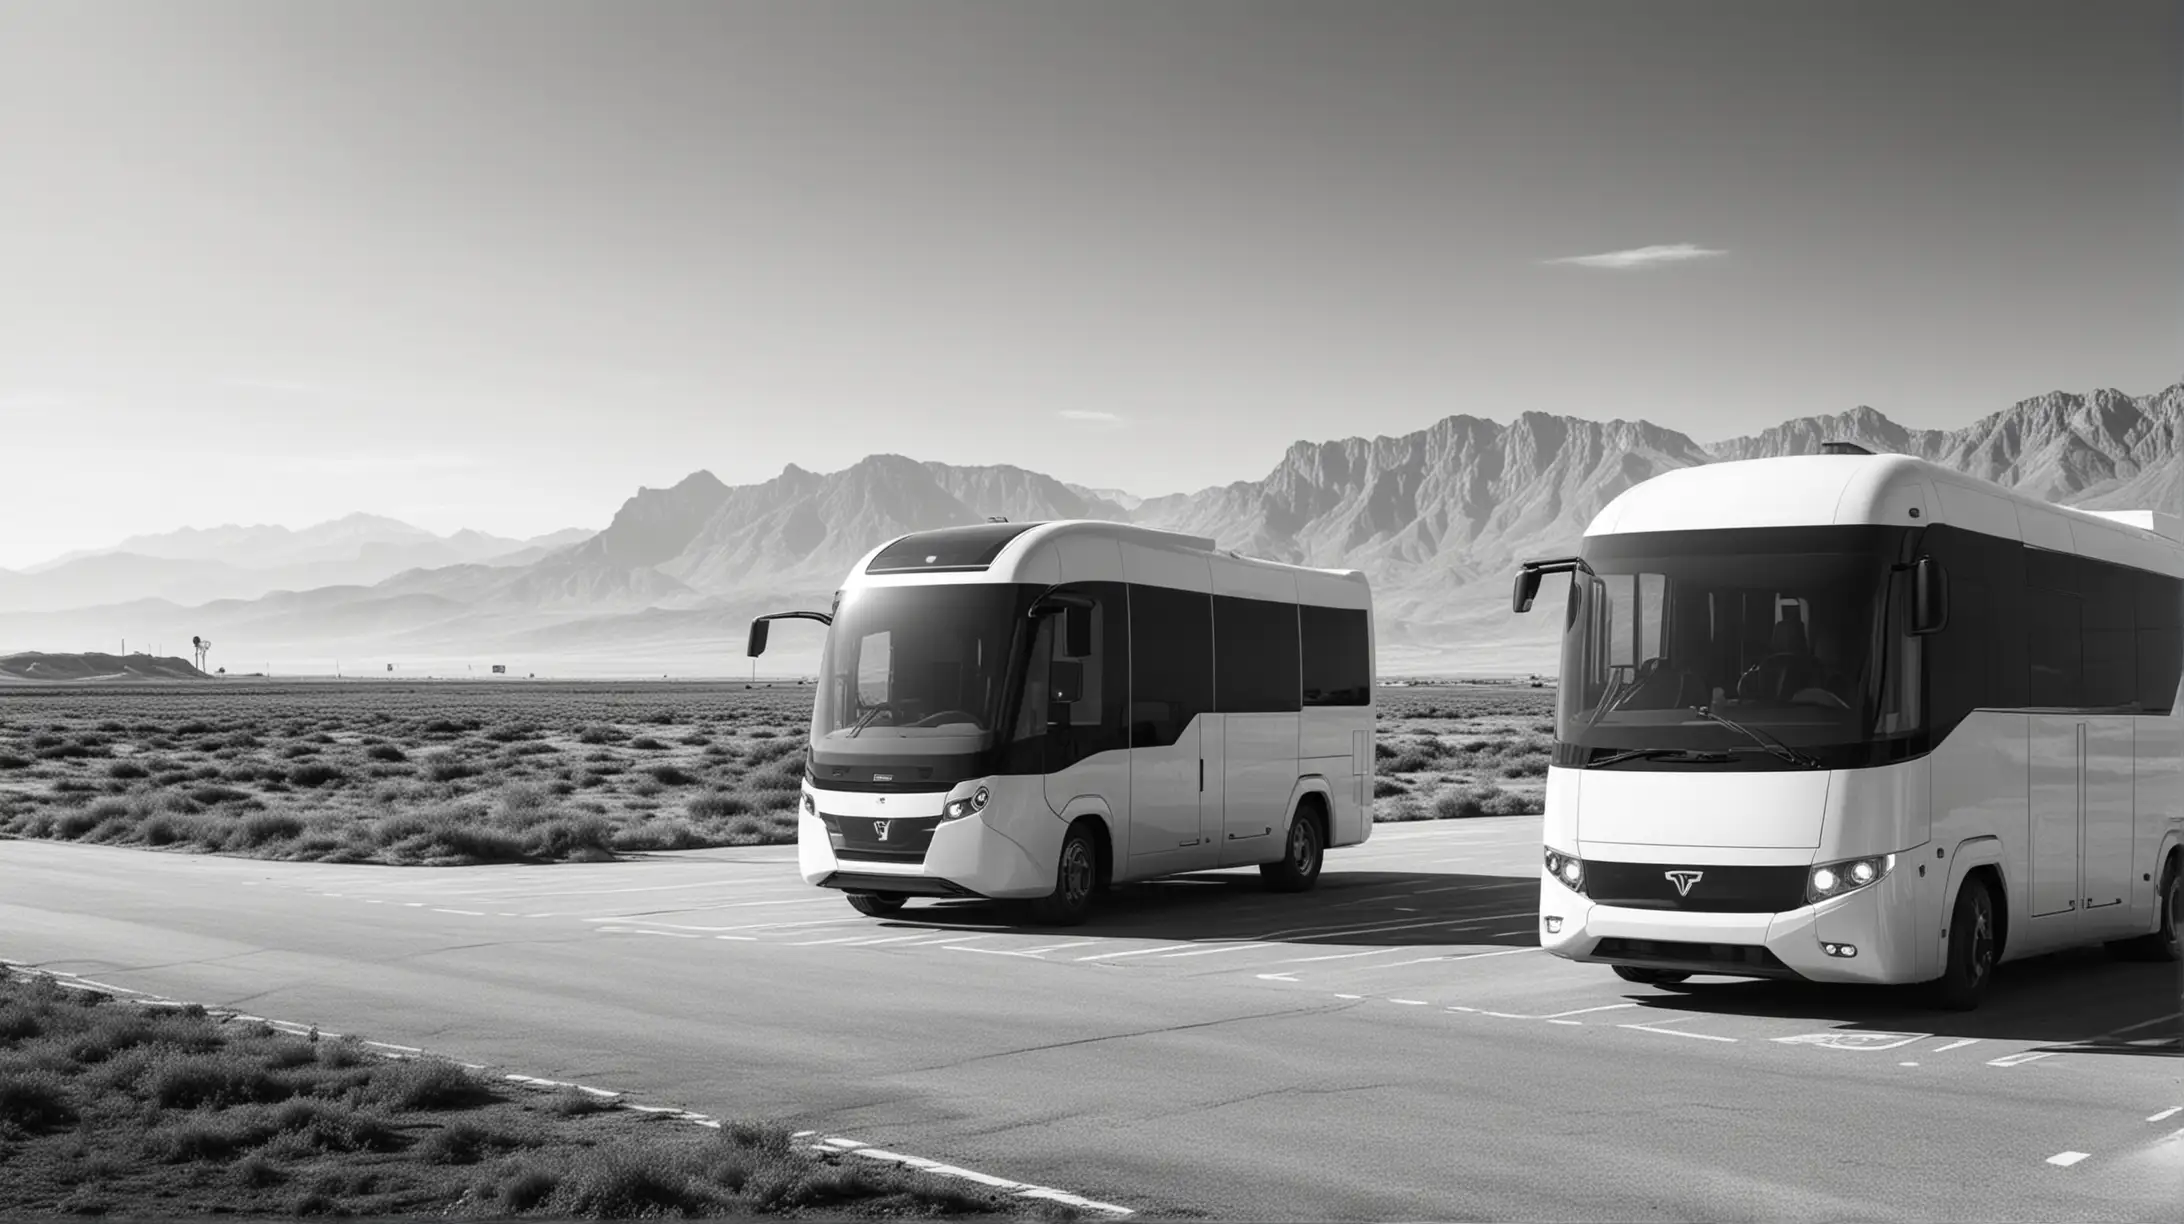 Futuristic Minimalist Electric Van and Bus Parked in Vast Monochromatic Landscape